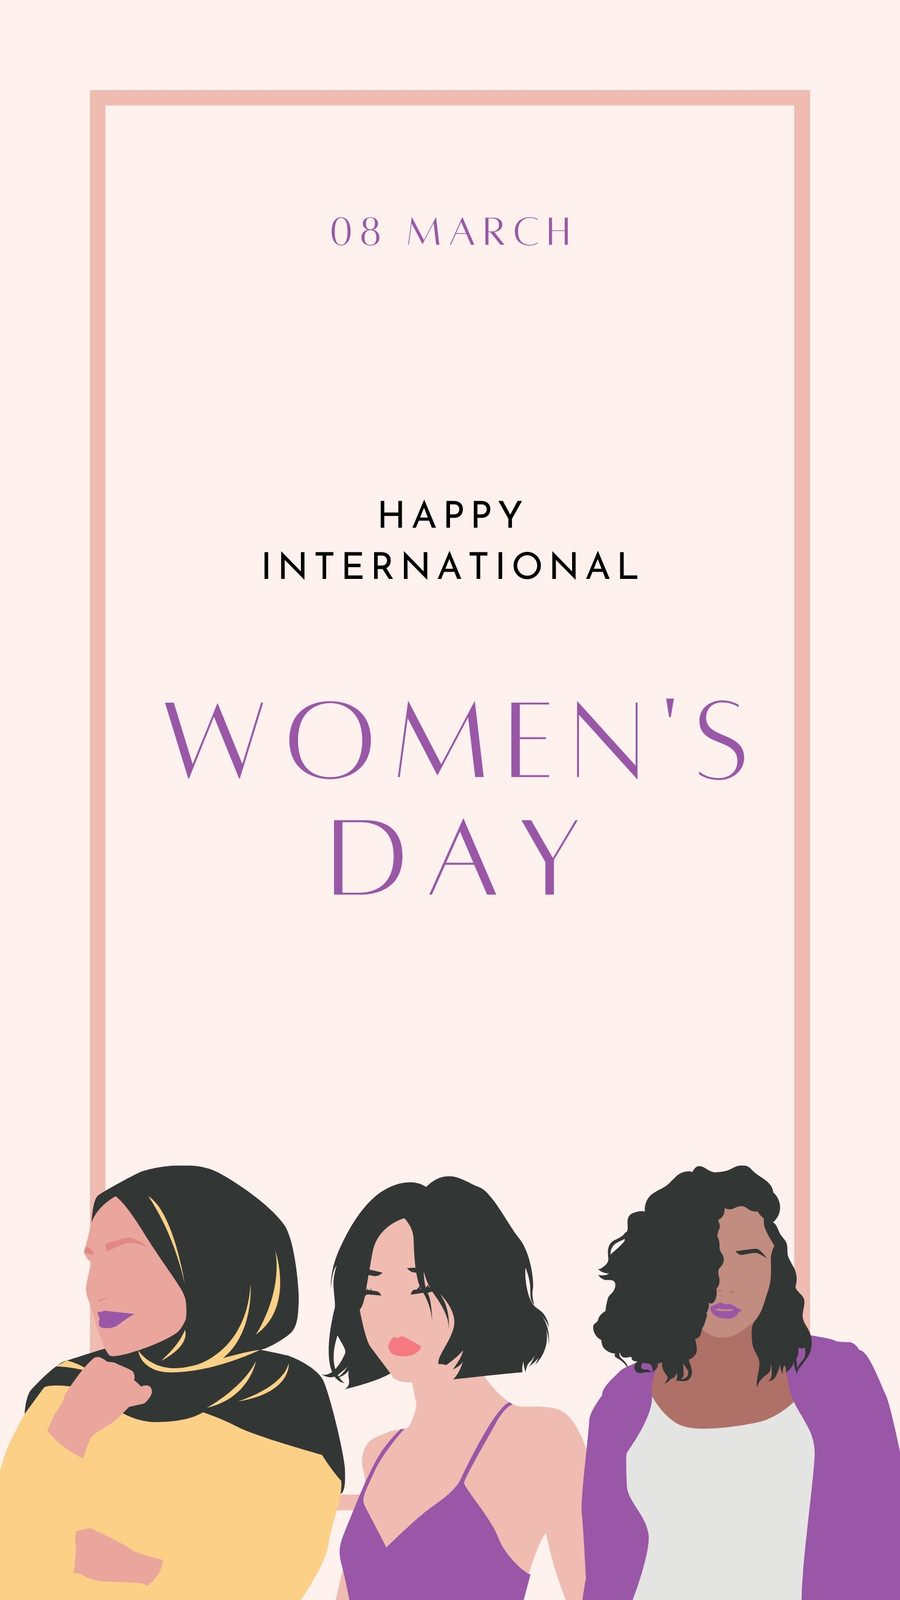 Happy International Women's Day, Story